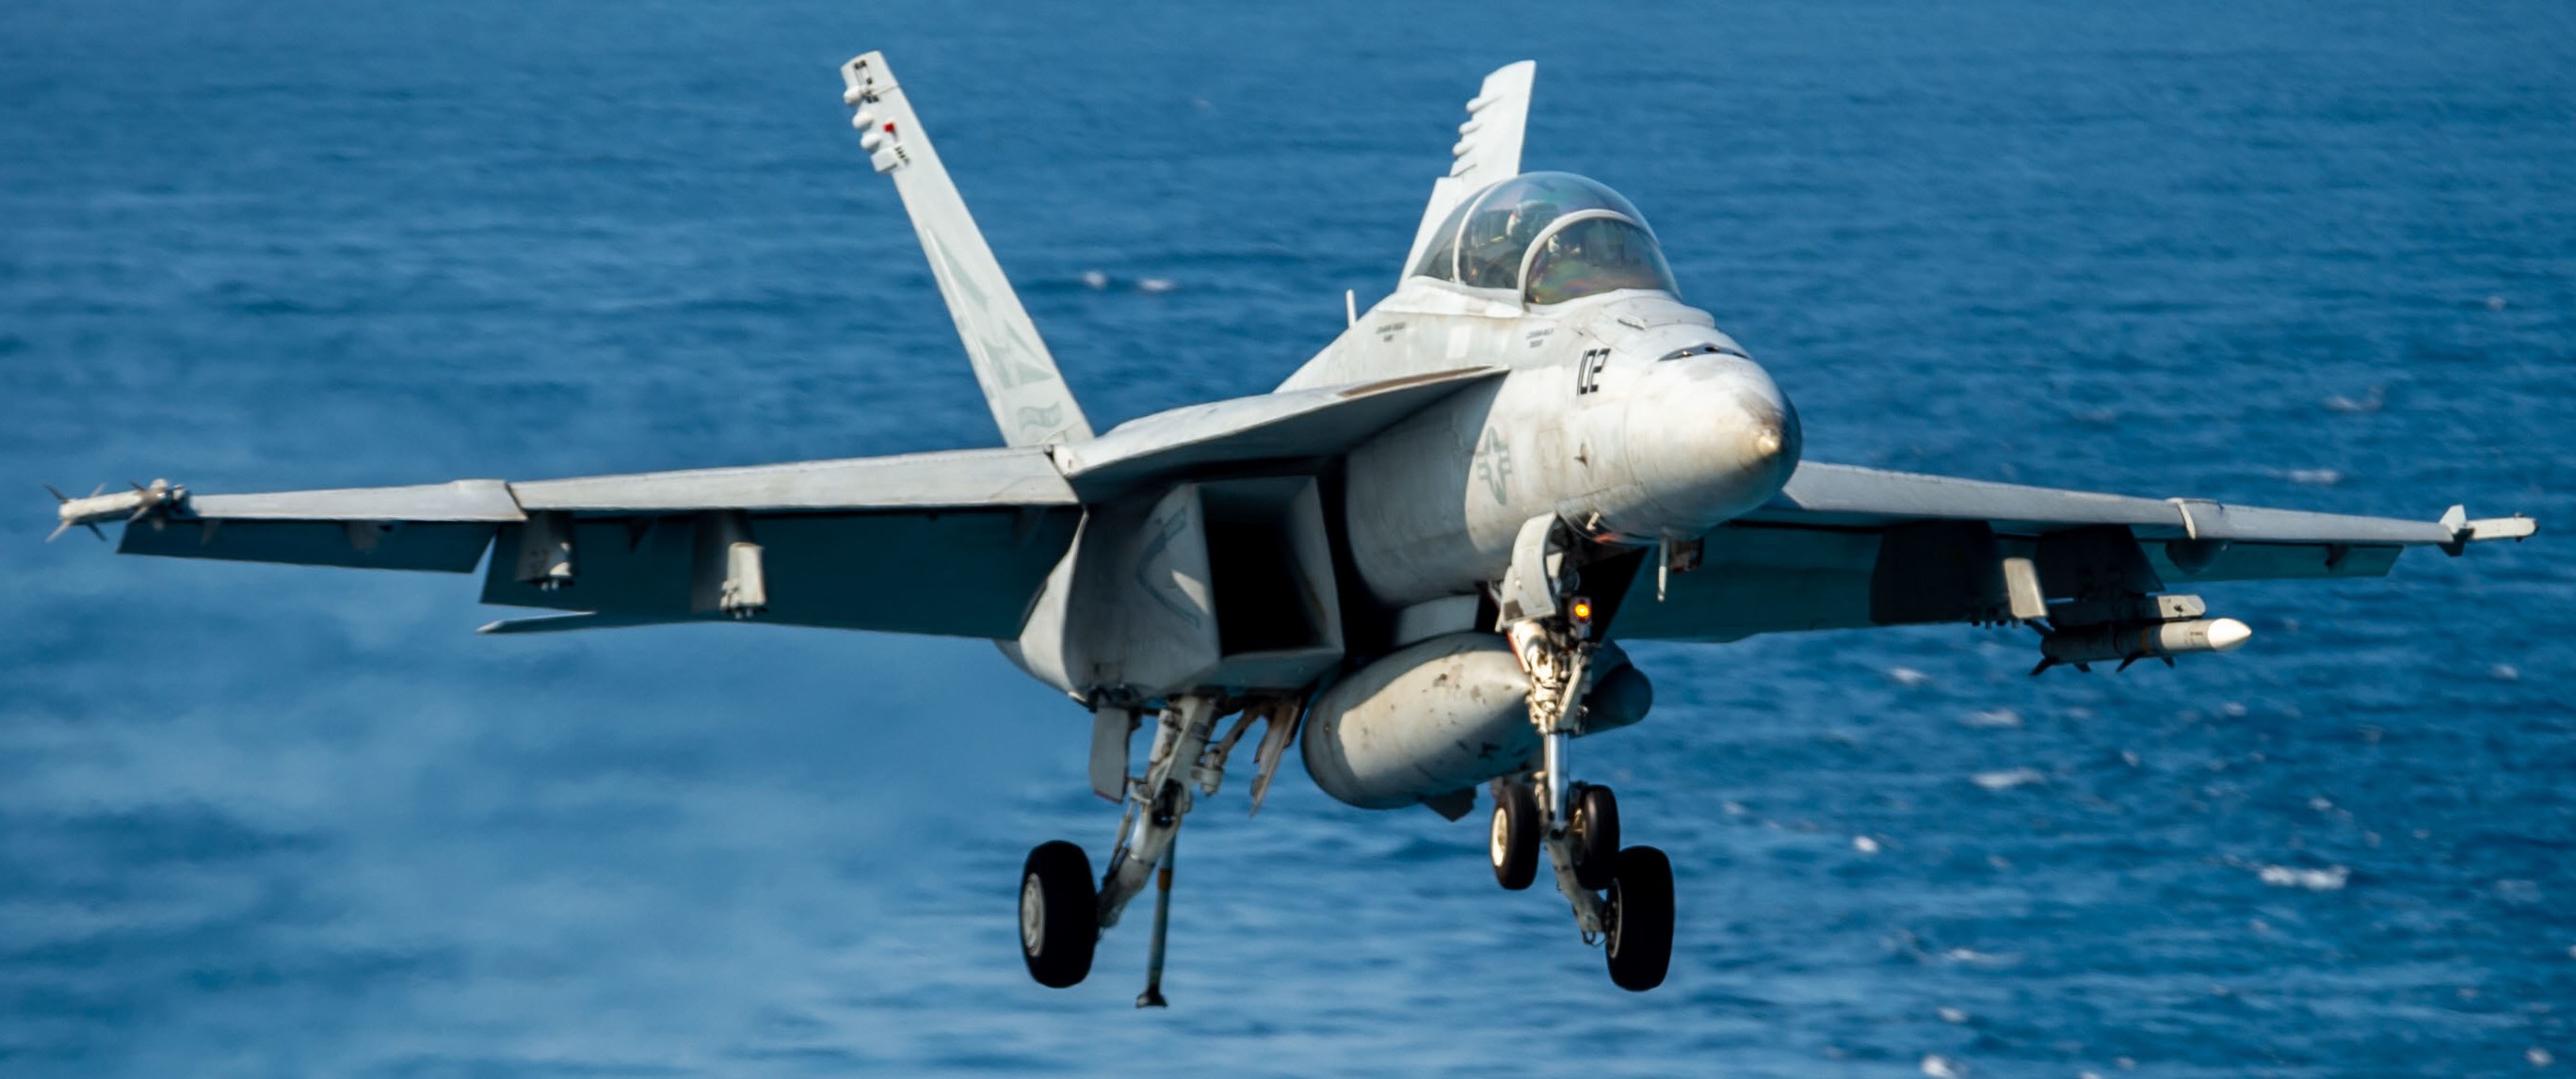 vfa-2 bounty hunters strike fighter squadron us navy f/a-18f super hornet carrier air wing cvw-2 uss carl vinson cvn-70 115